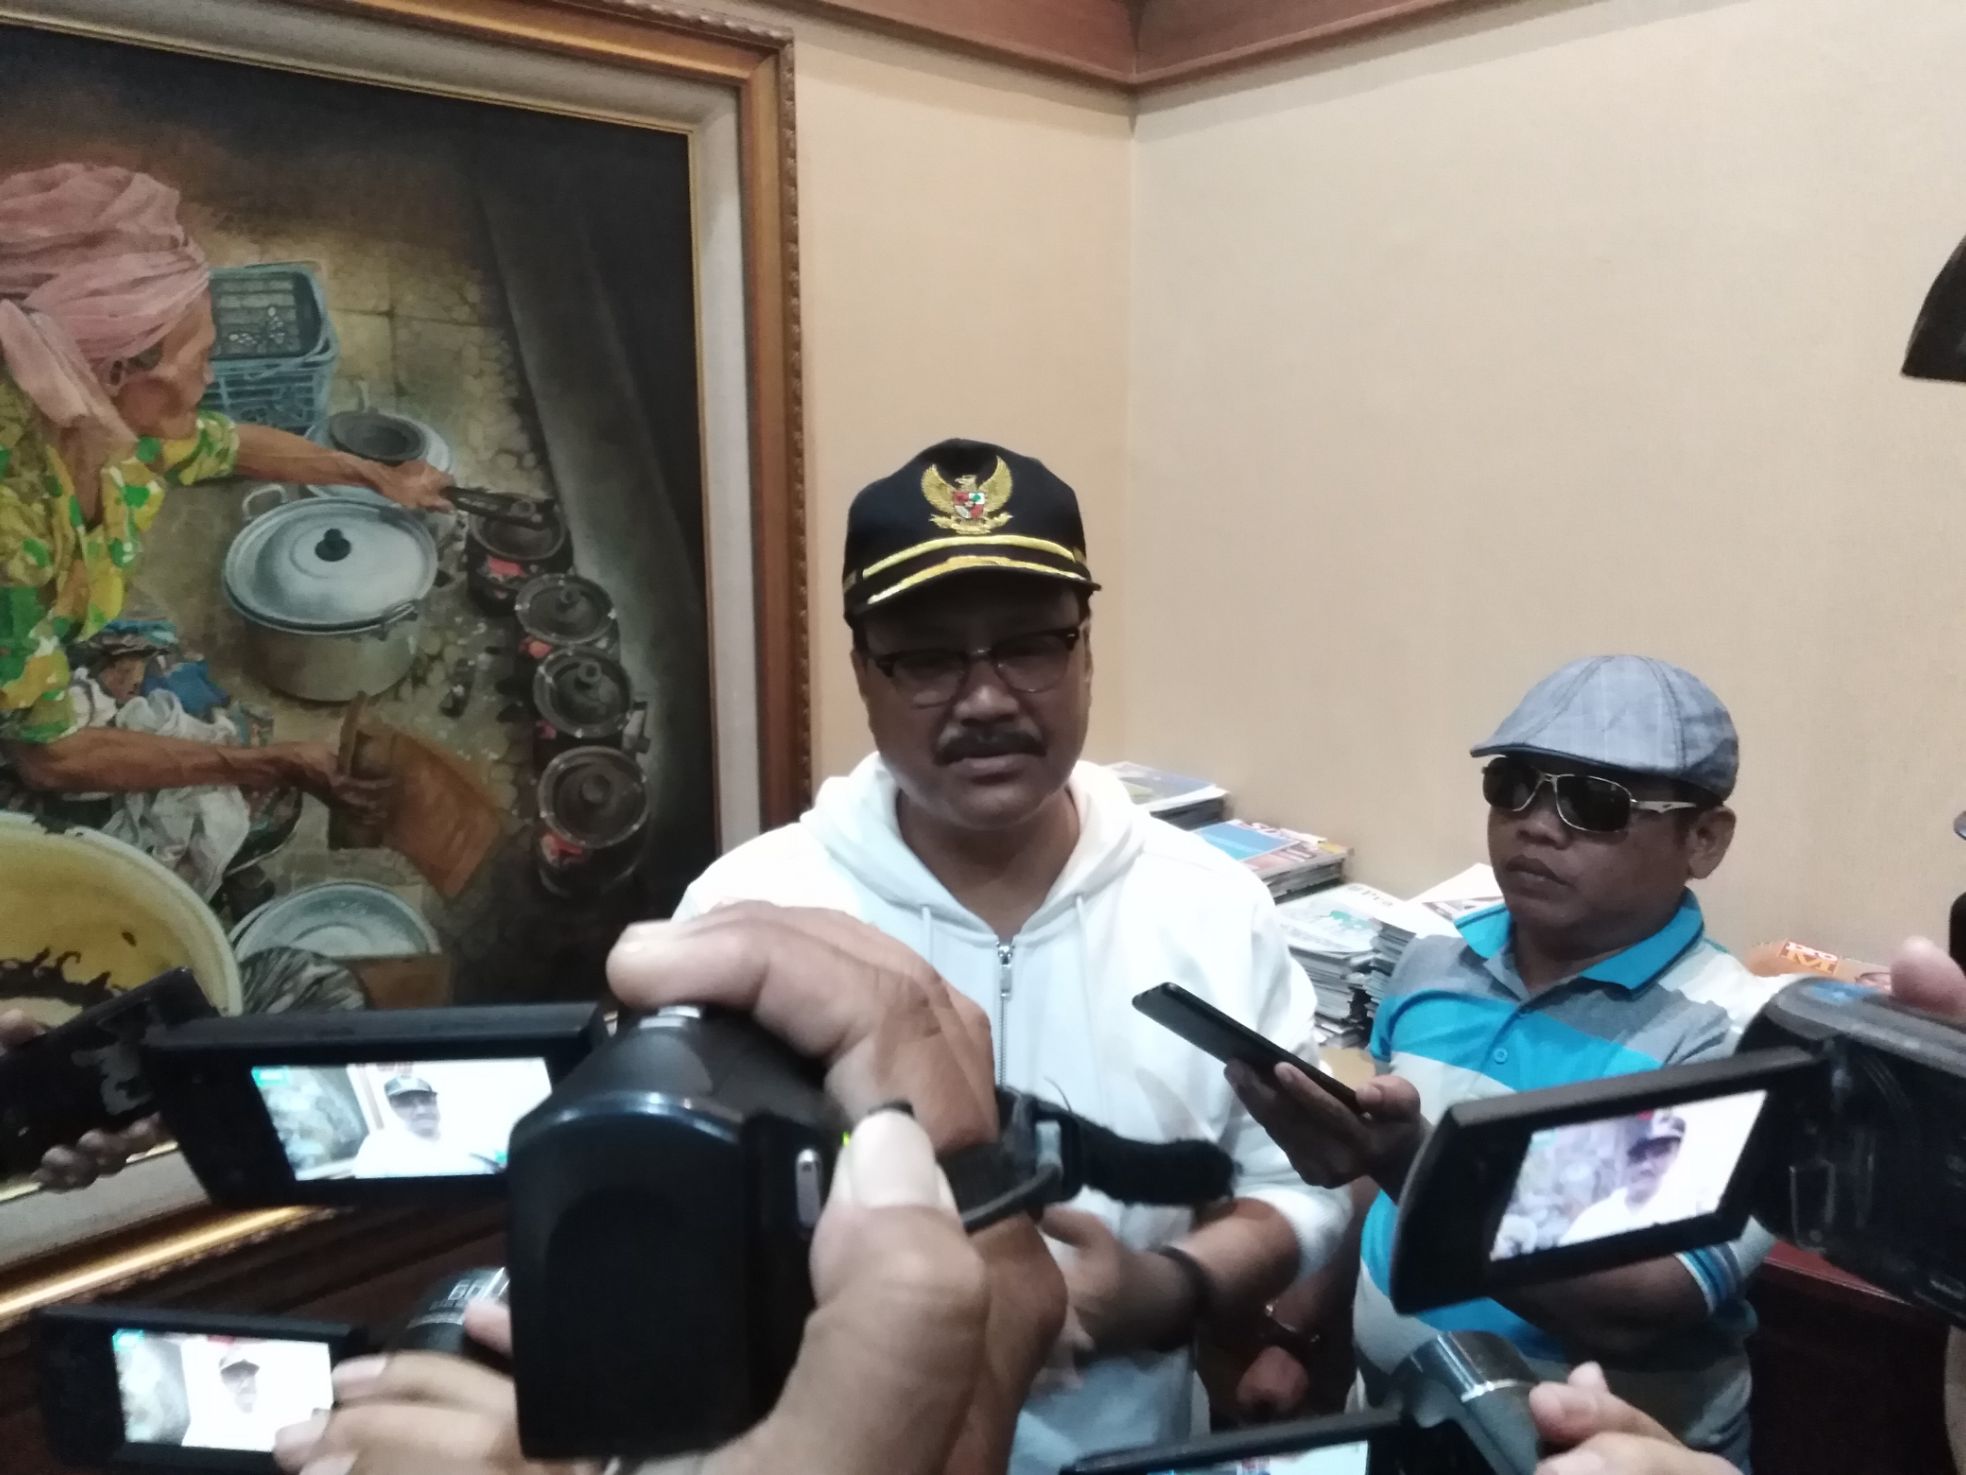 Gus Ipul, ketika ditemui di kantor Wakil Gubernur Jawa Timur, Senin, 22 Oktober 2018.